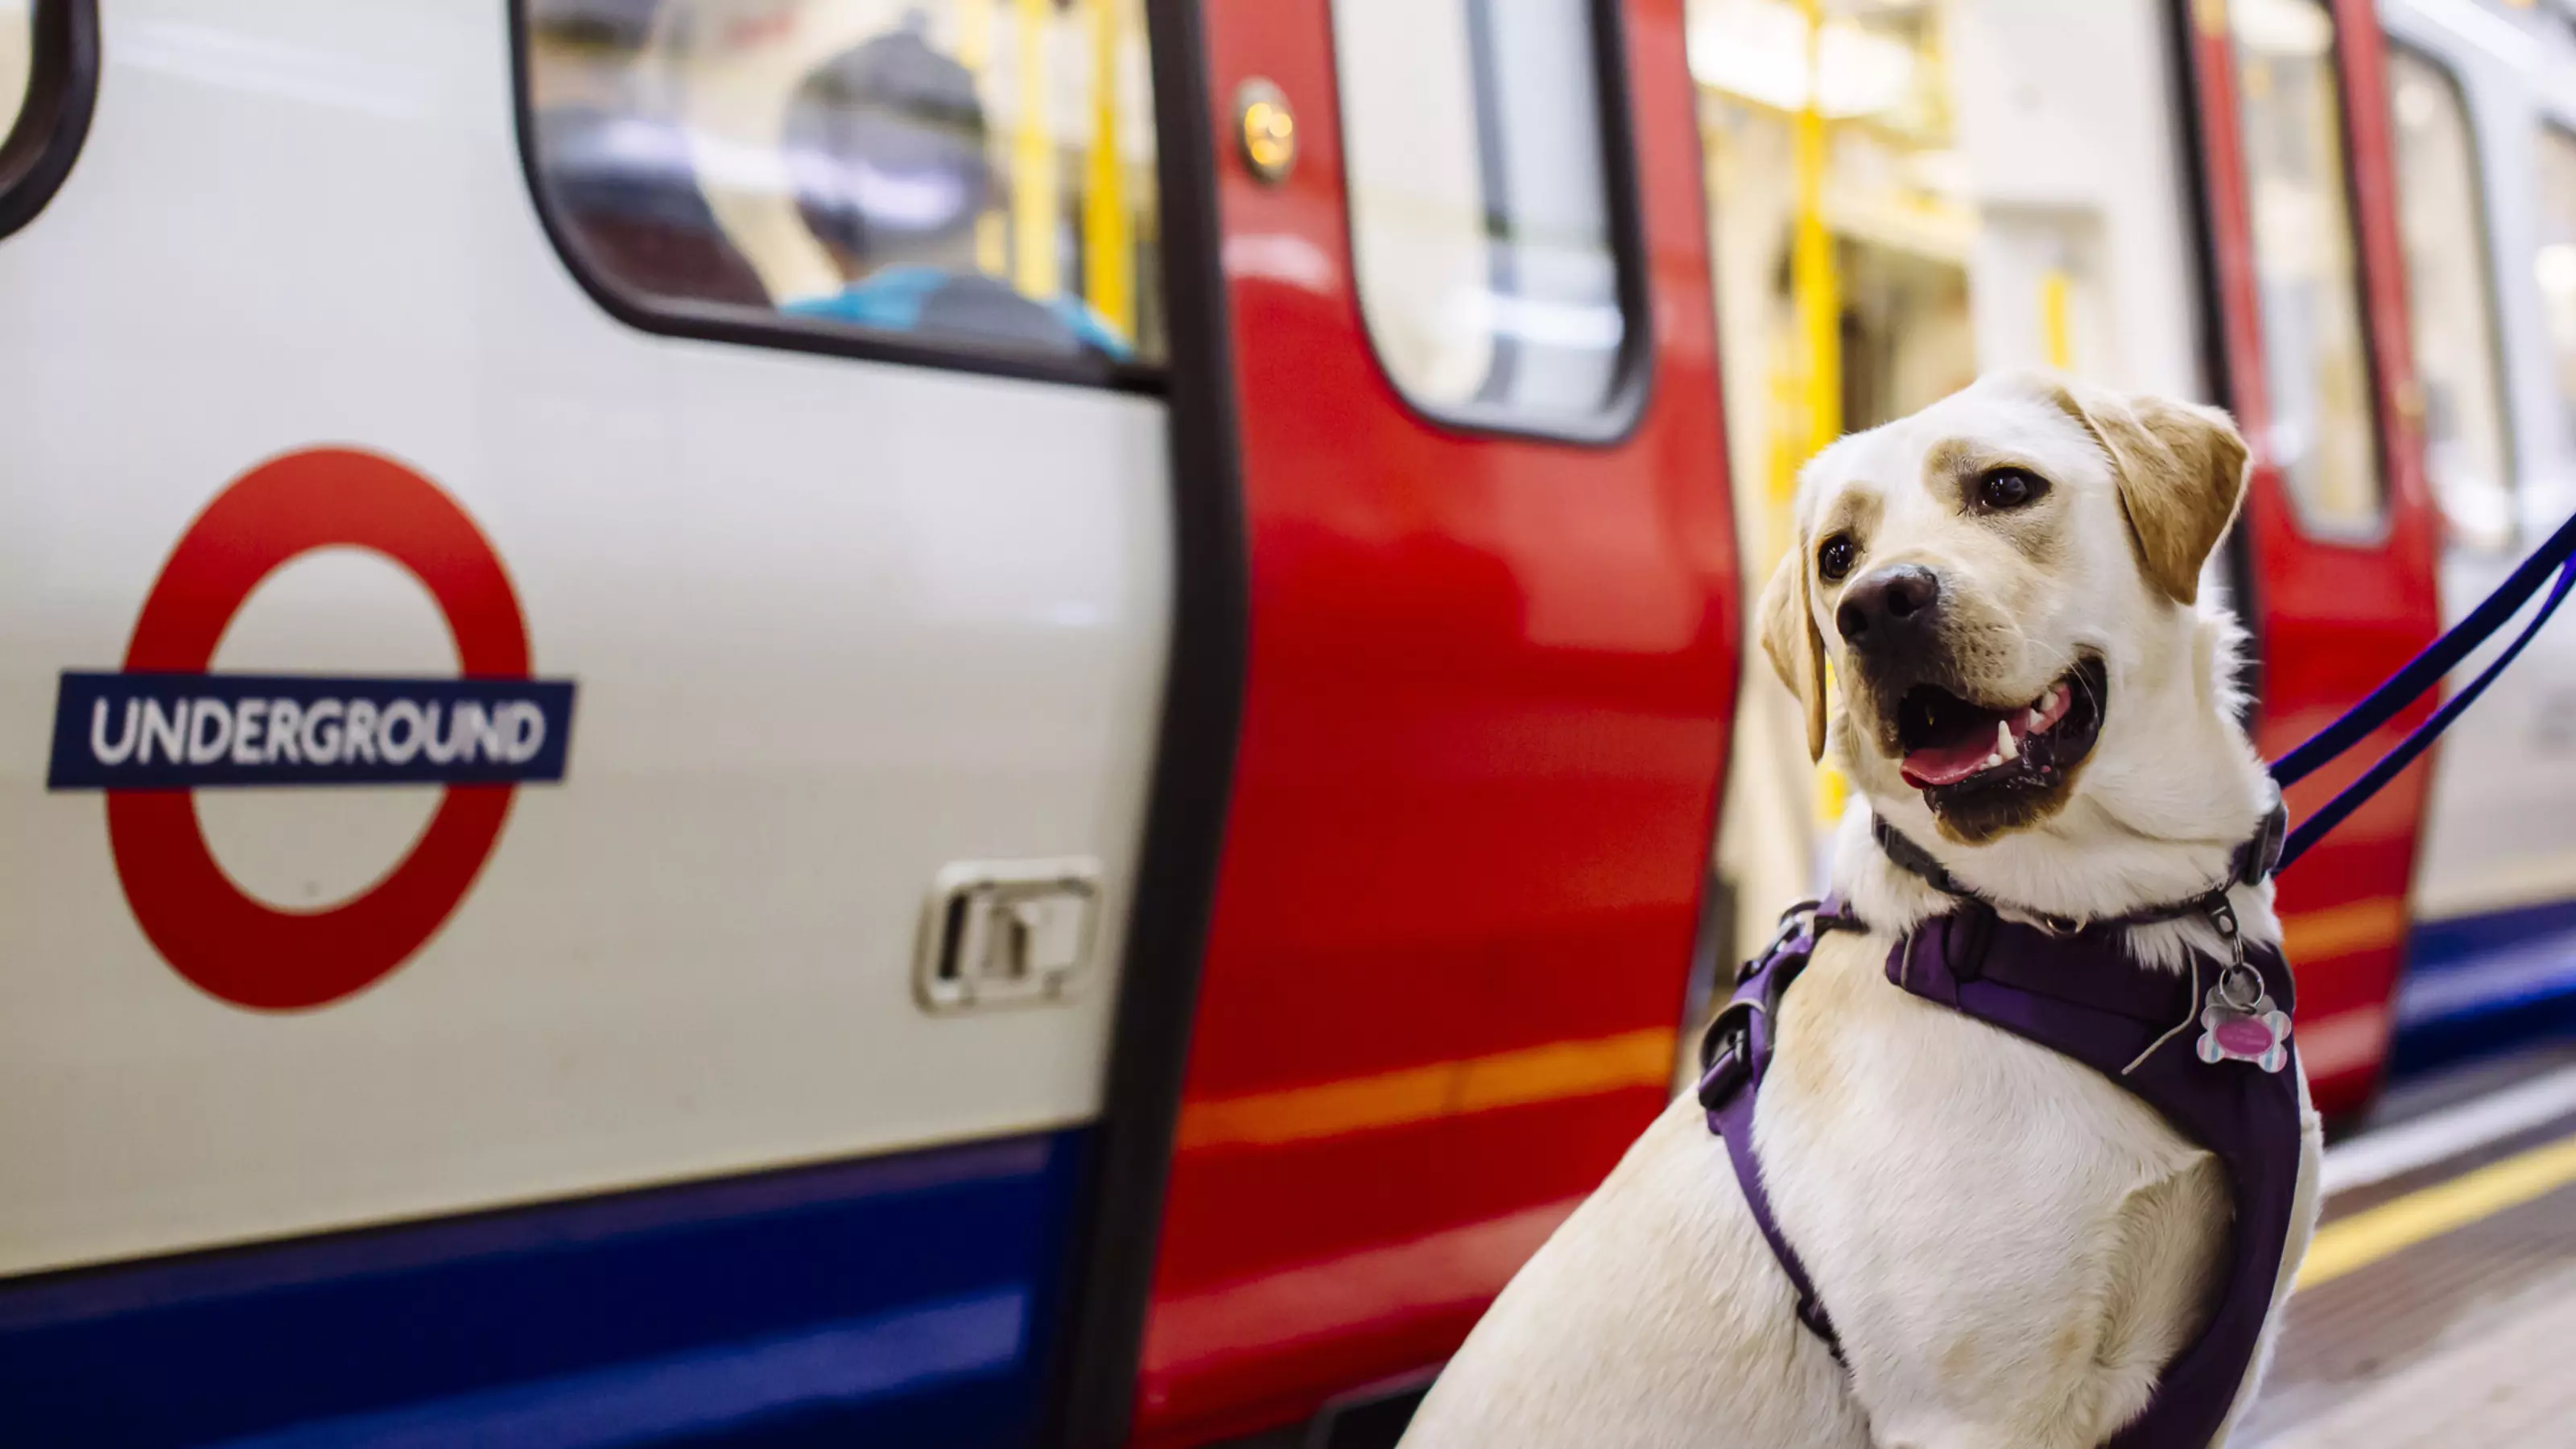 Golden Labrador stood on the platform waiting for Underground train